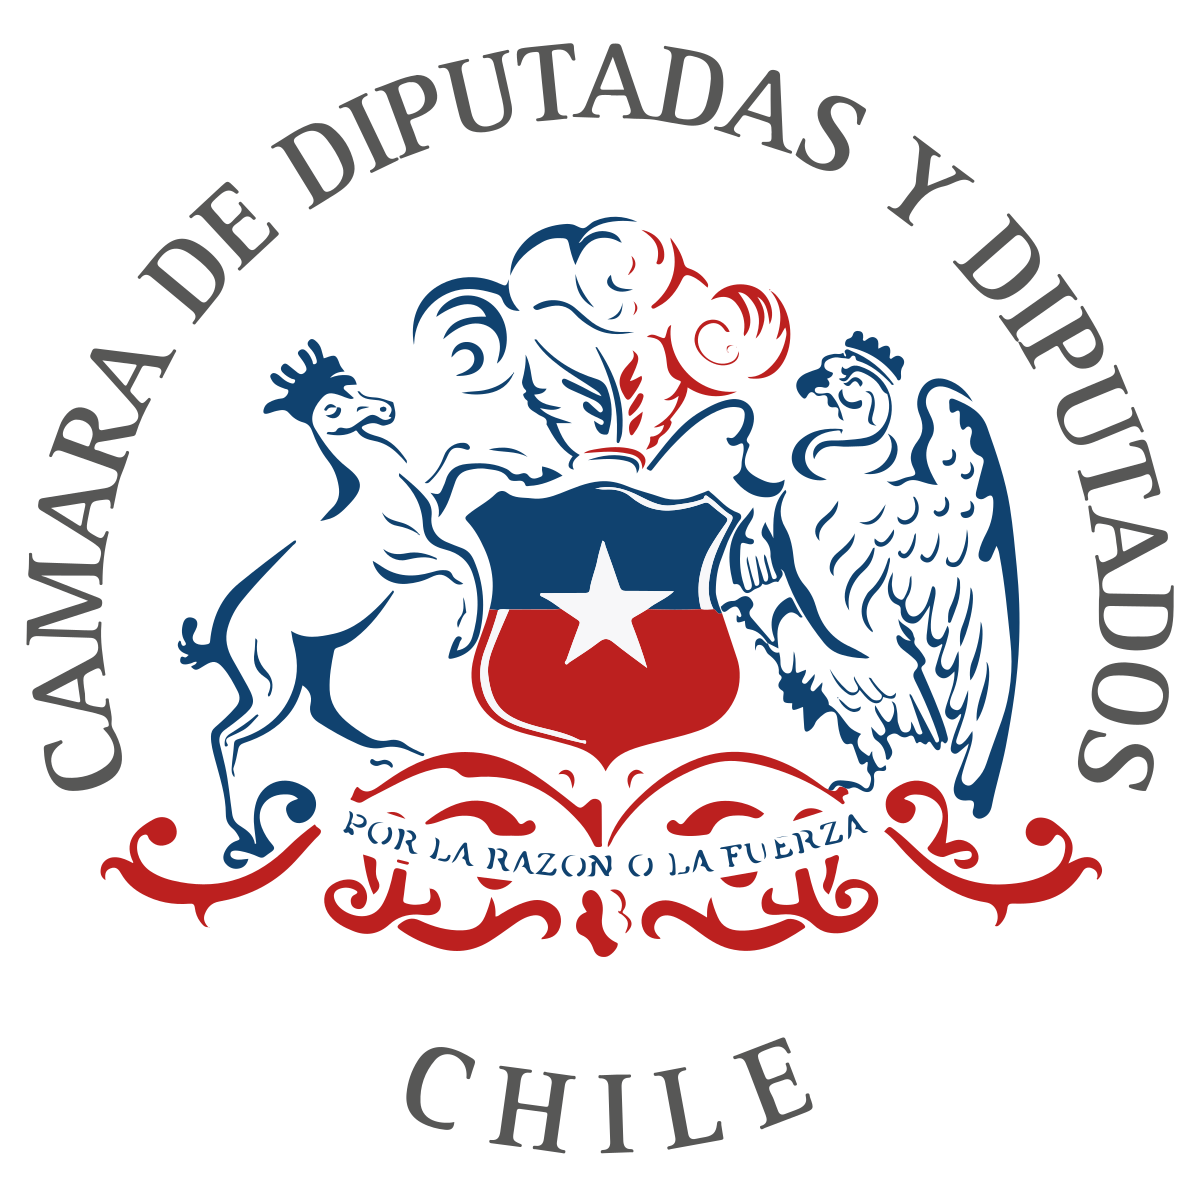 Christian Democratic Party (Chile) - Wikipedia